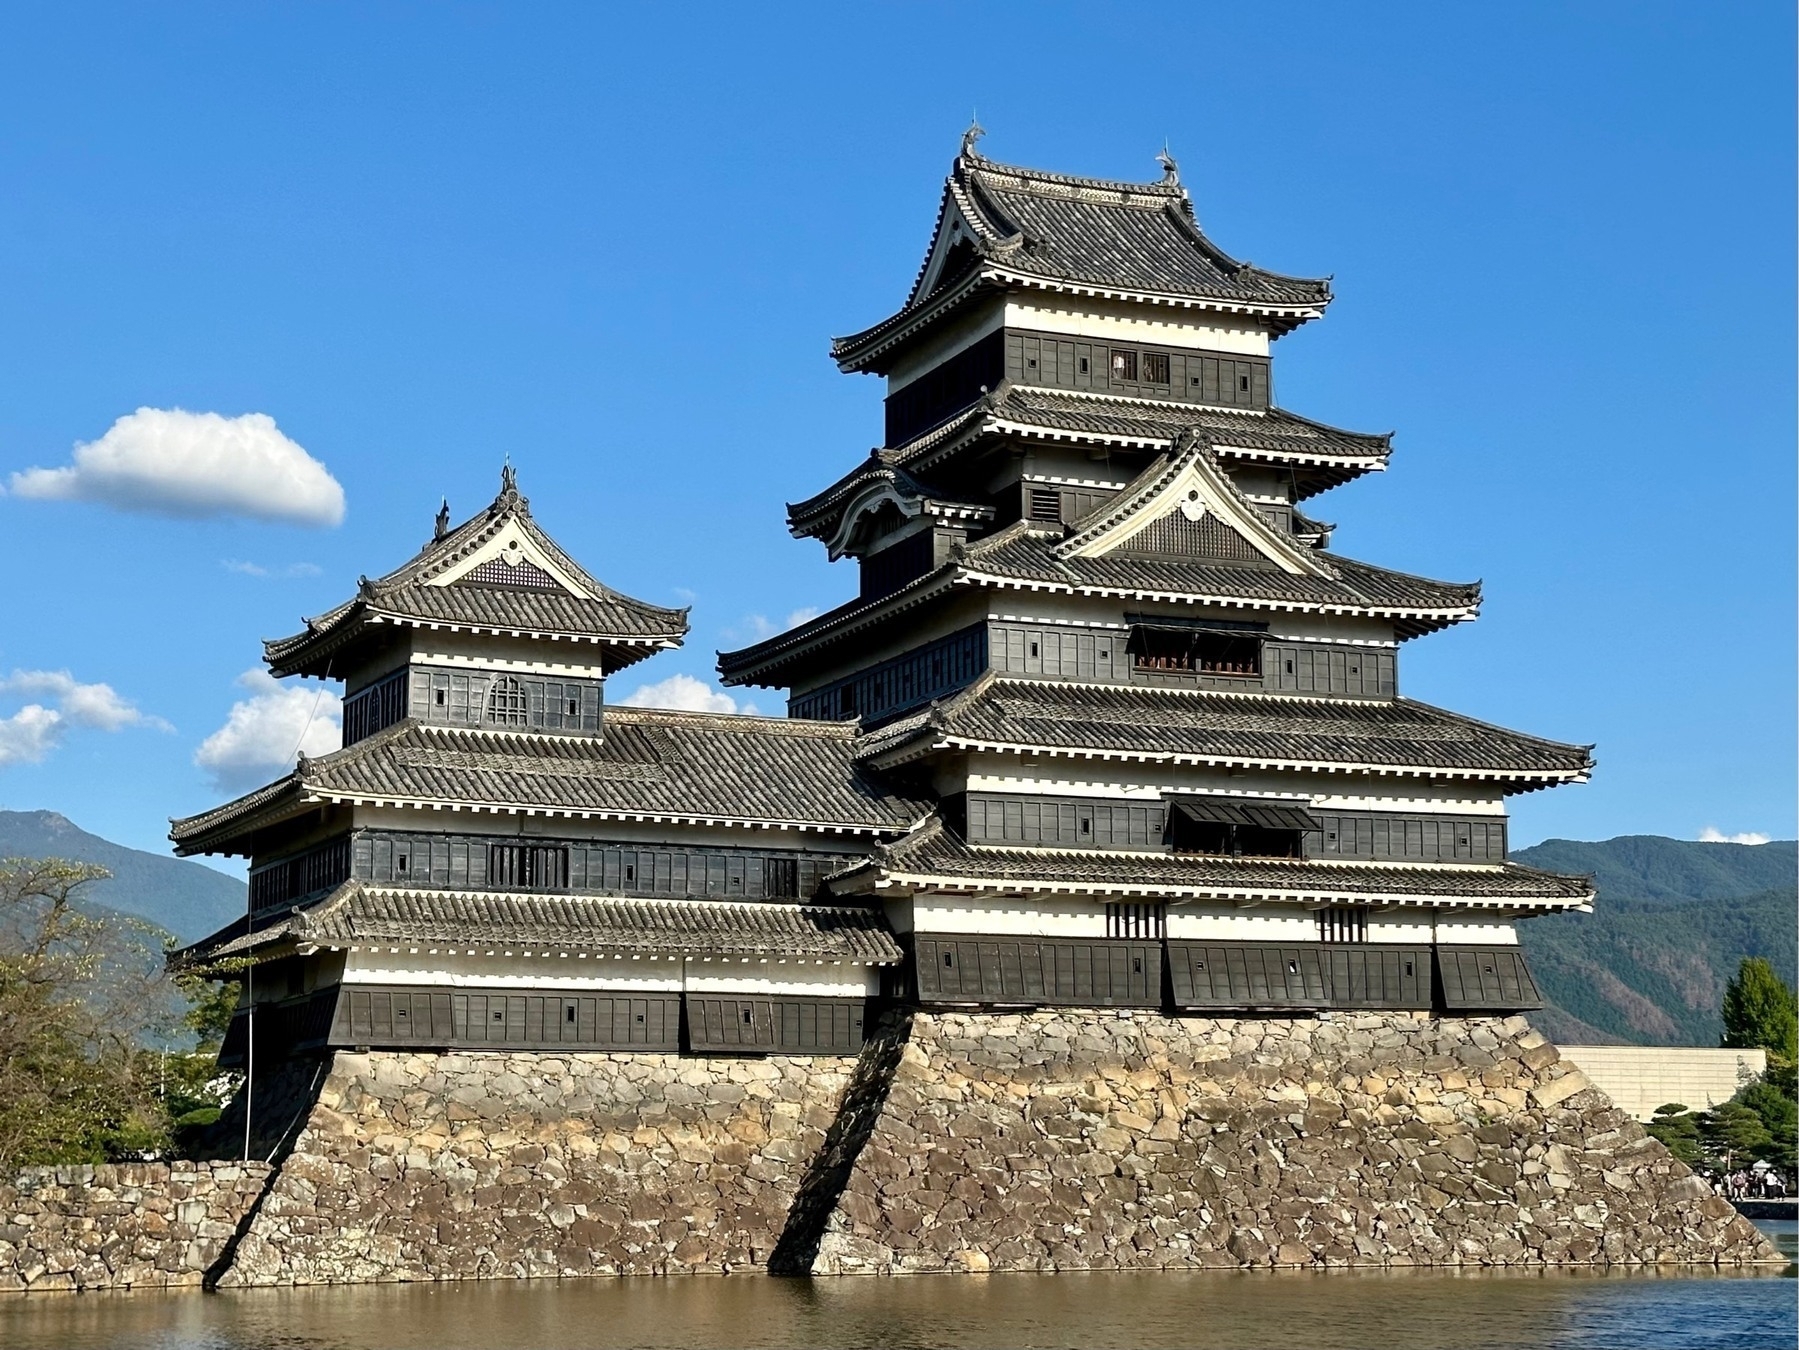 Japanese castle across its moat, set against a blue sky with a single cloud